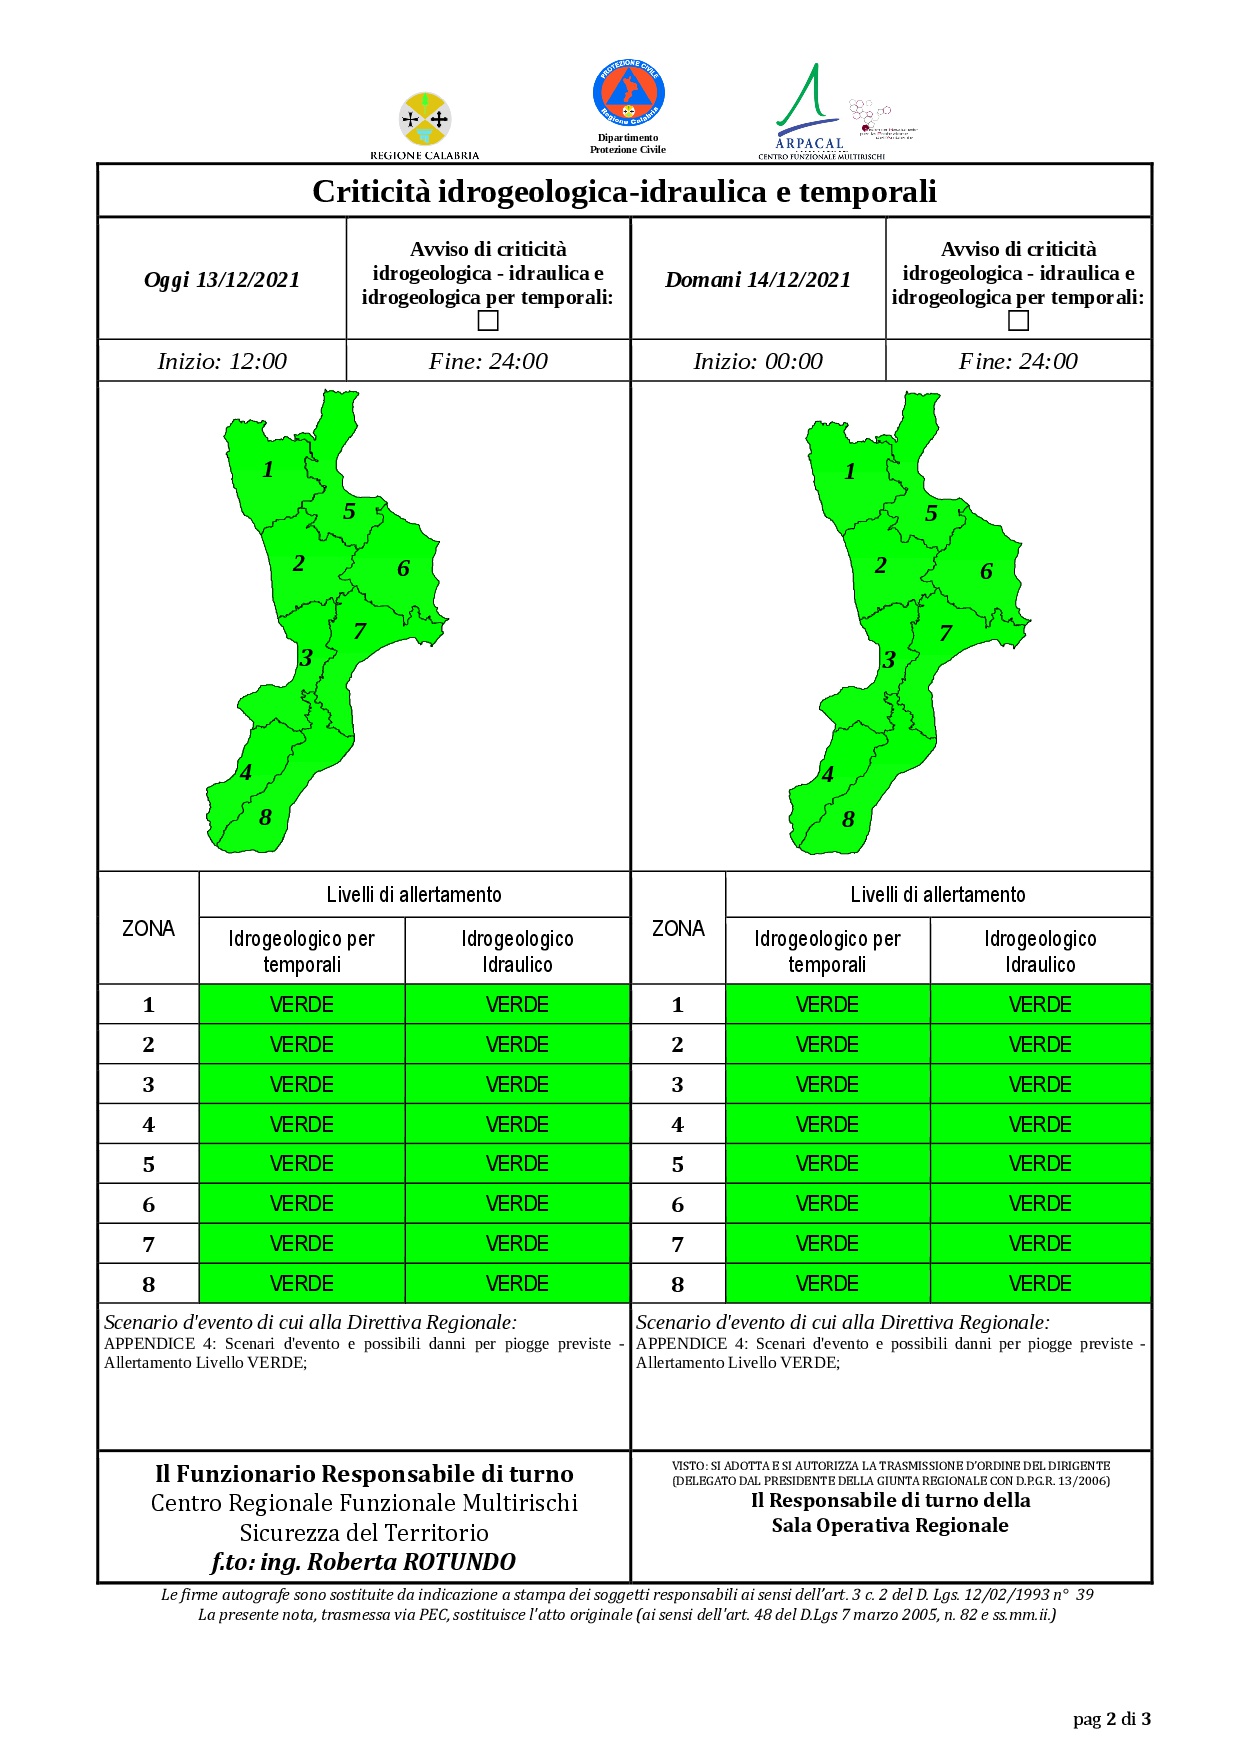 Criticità idrogeologica-idraulica e temporali in Calabria 13-12-2021